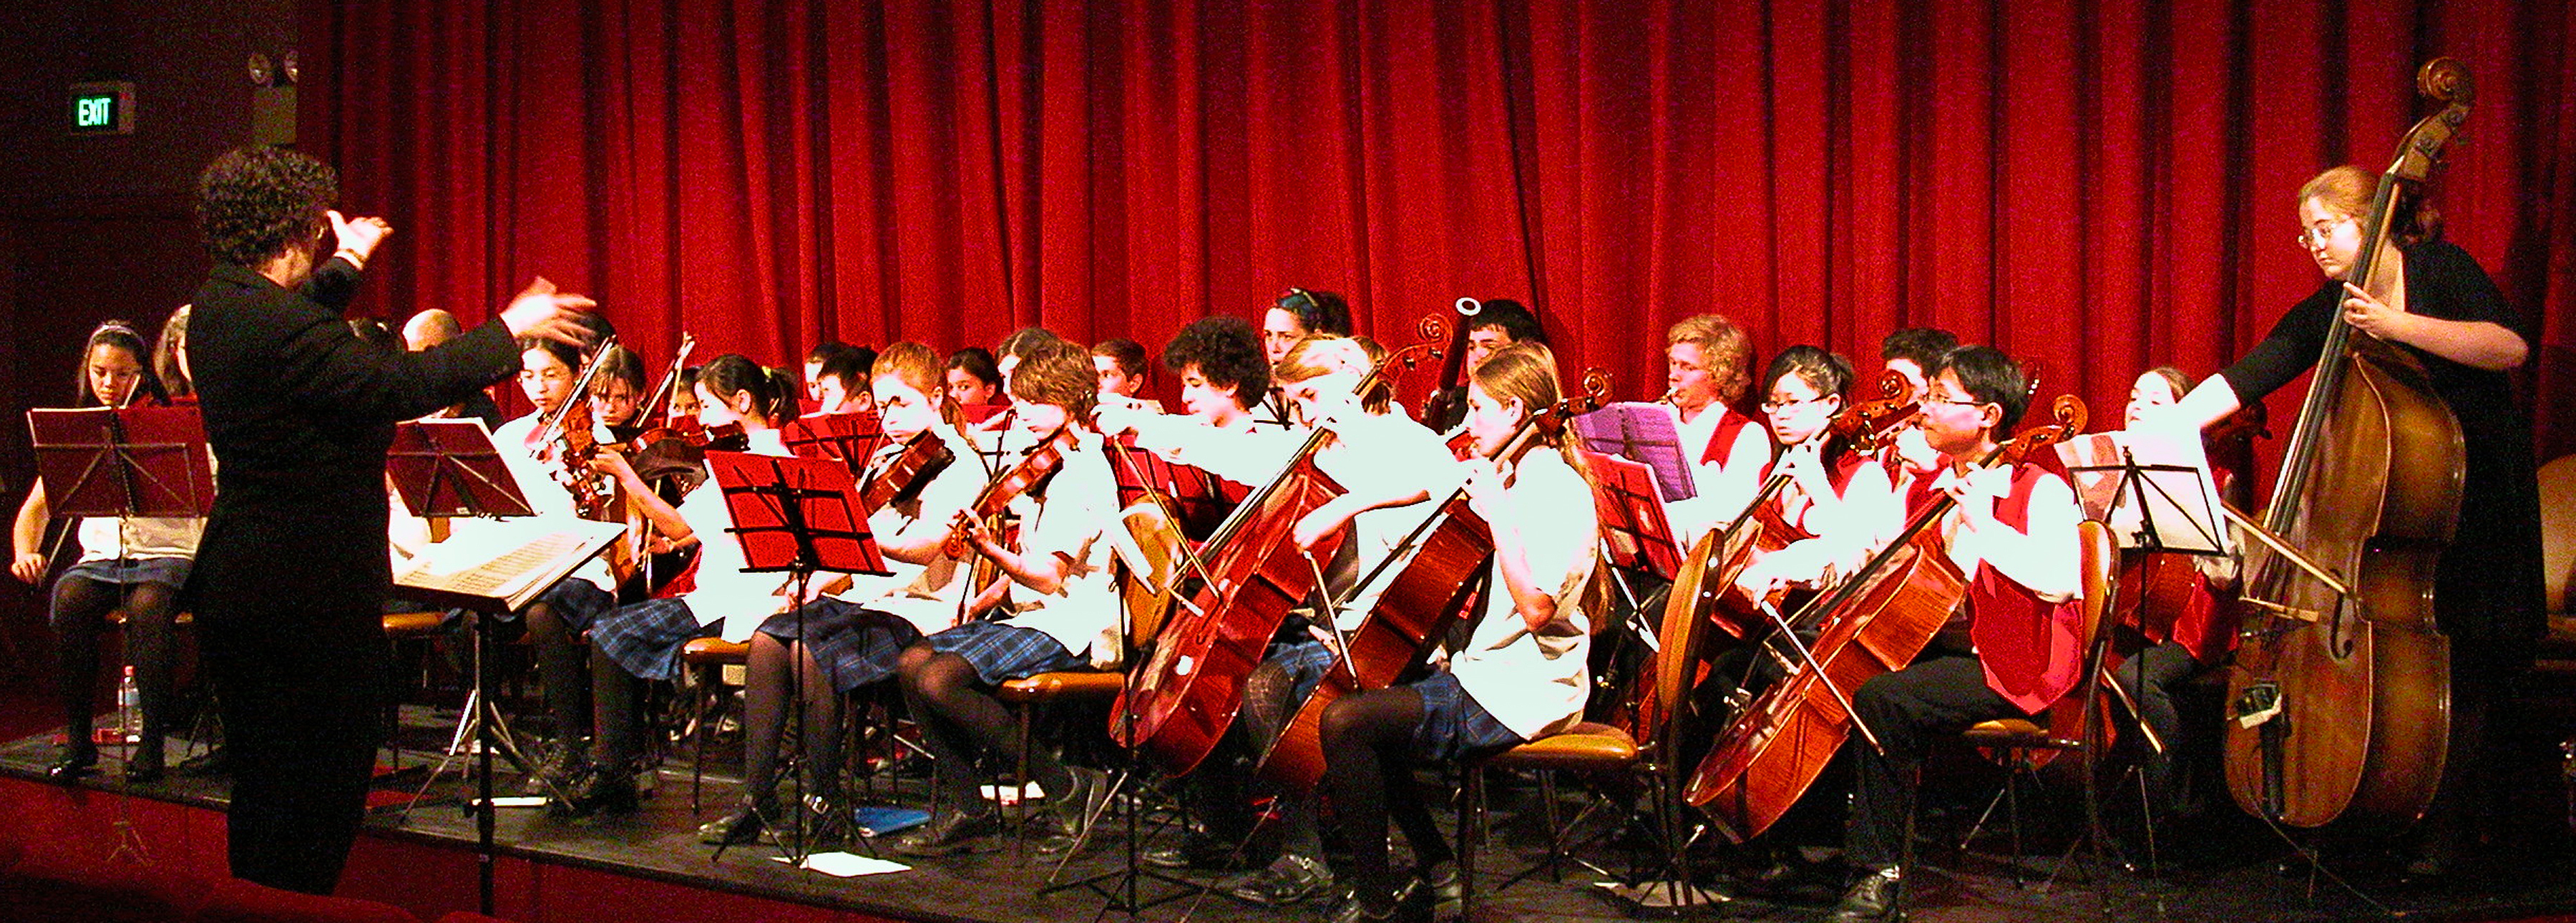 Orchestra instruments